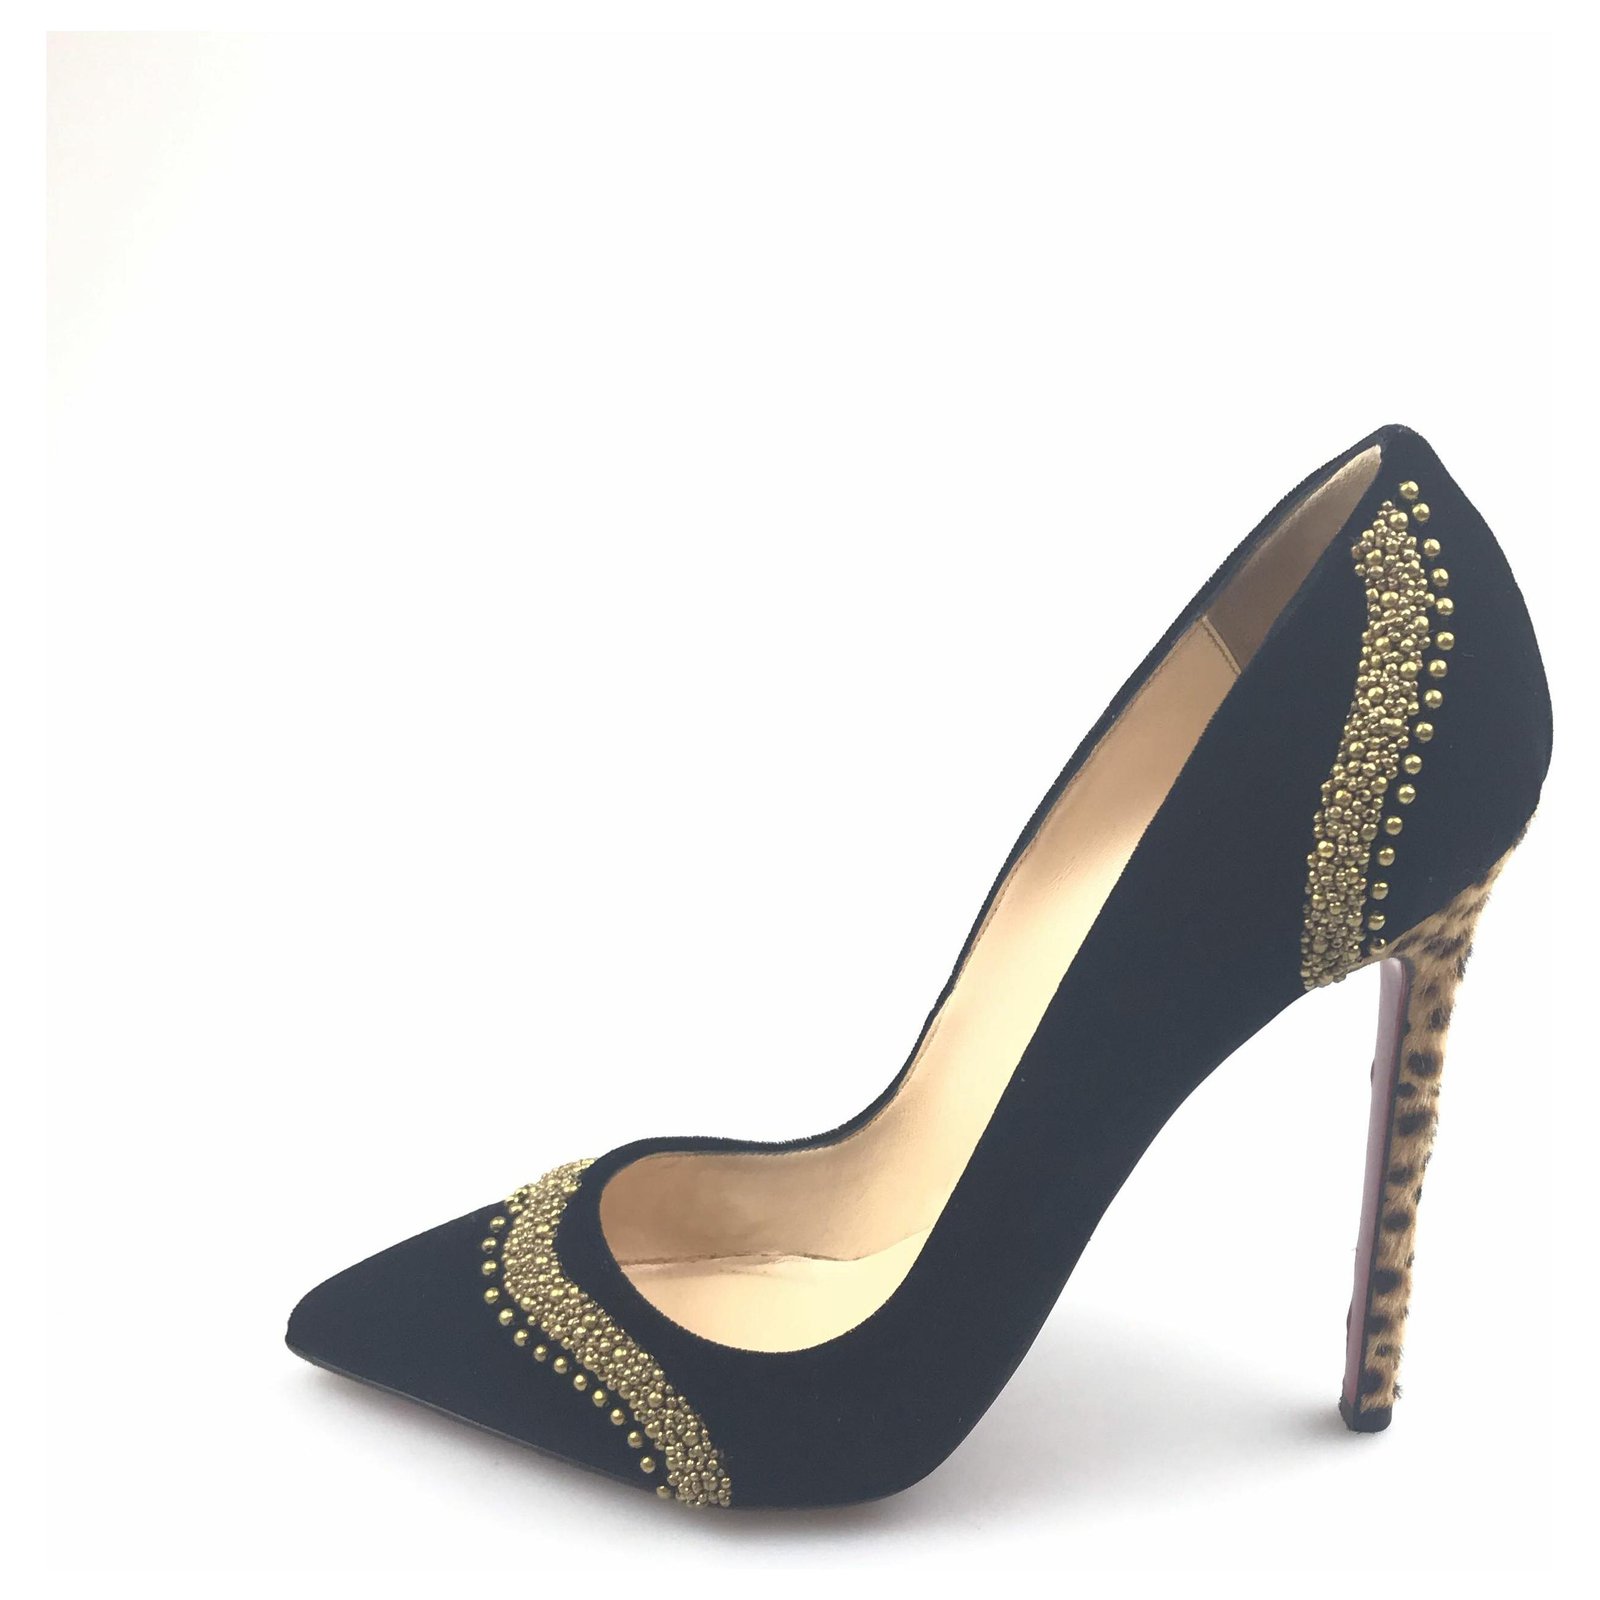 leopard pump heels